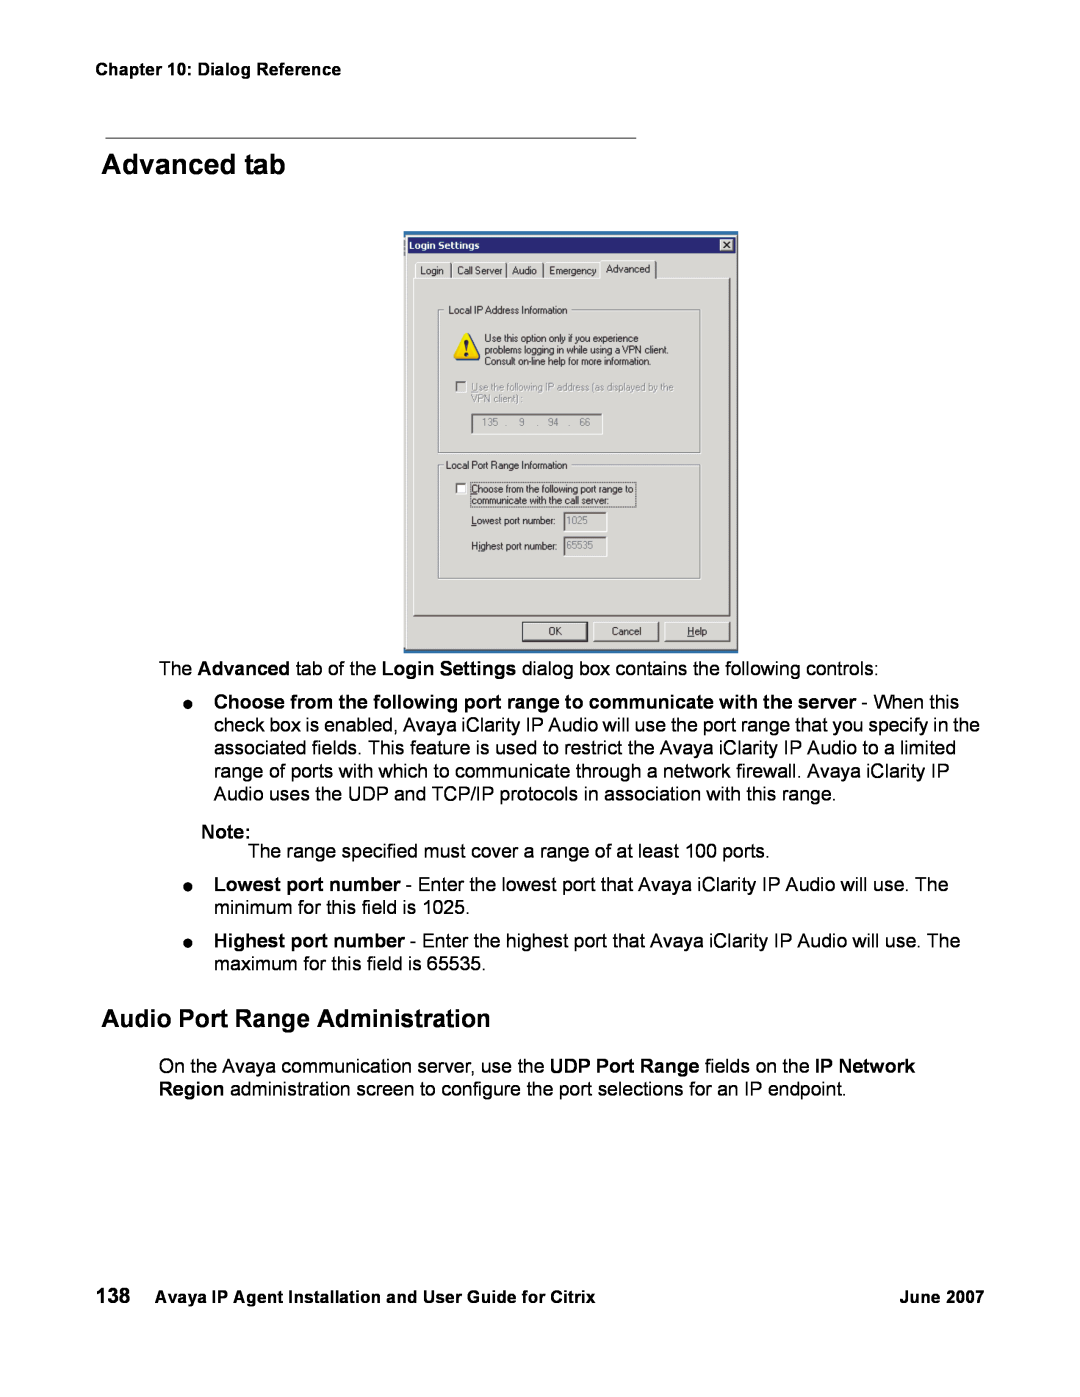 Avaya 7 manual Advanced tab, Audio Port Range Administration 